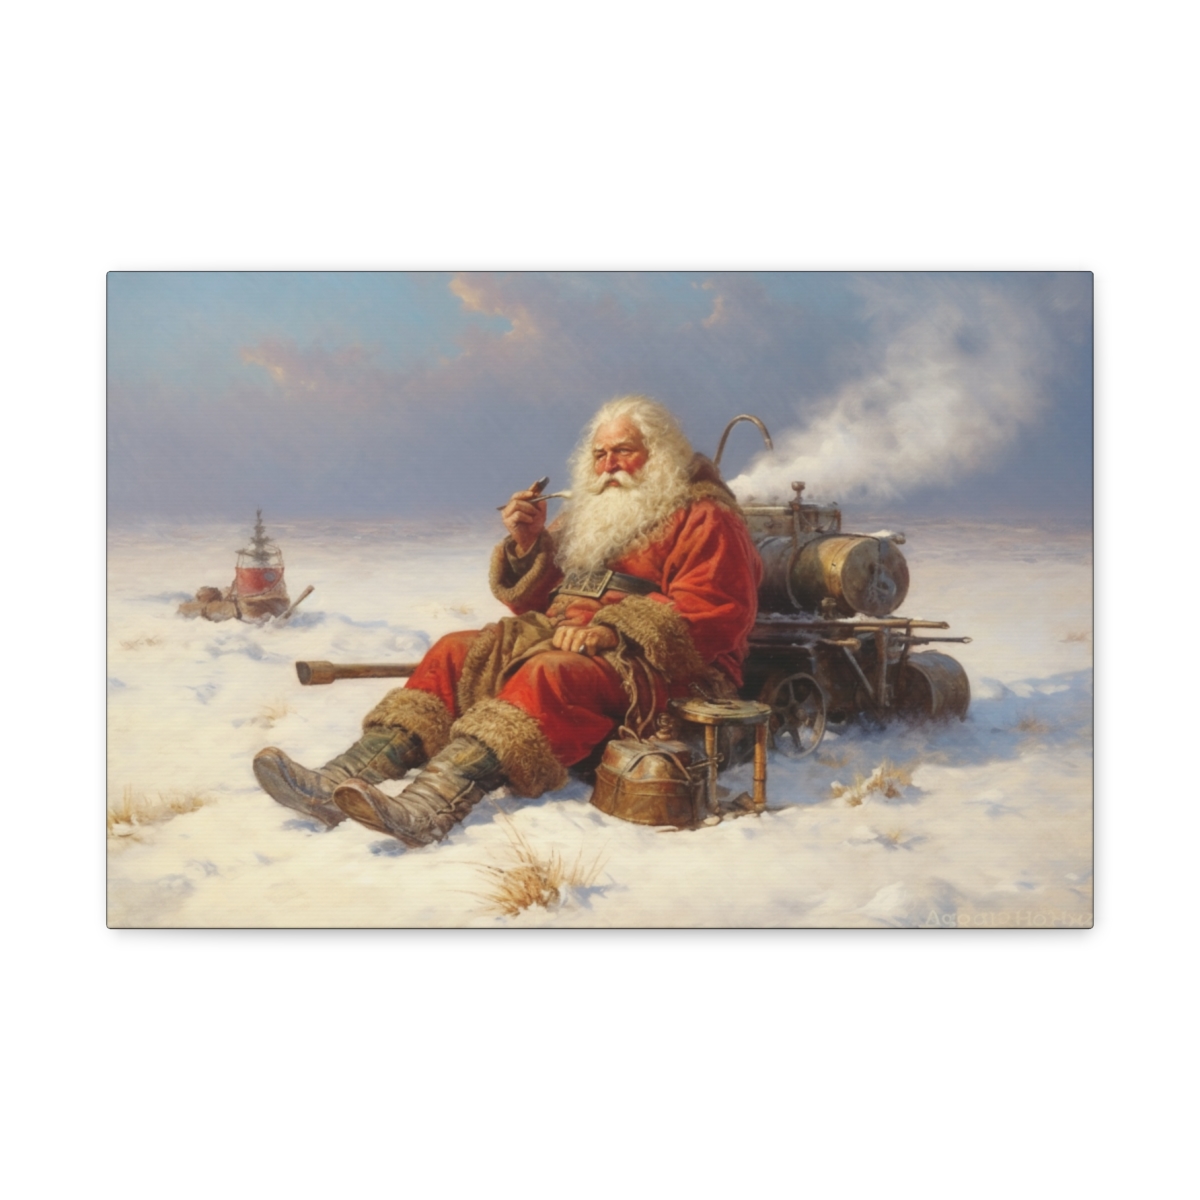 Stoner Art Print: Santa Claus Needs To Chill